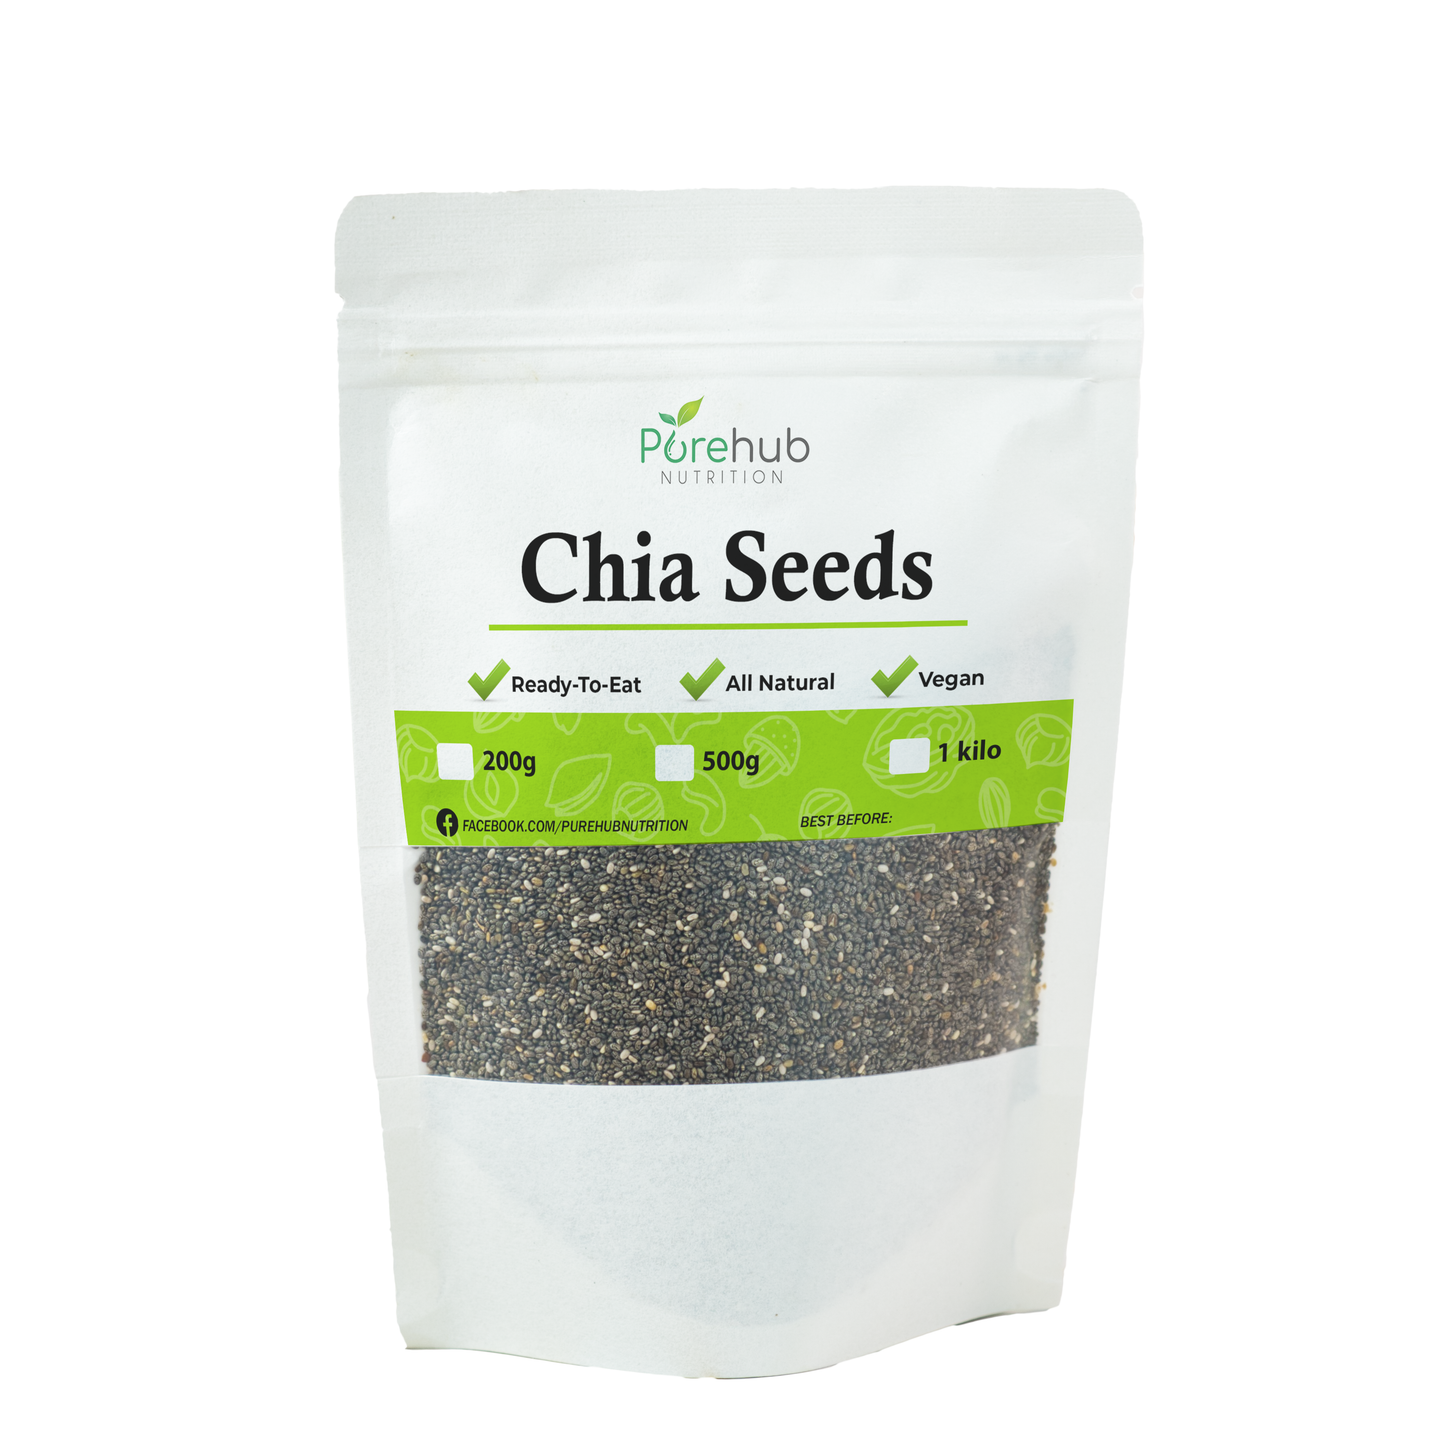 Black Chia Seeds